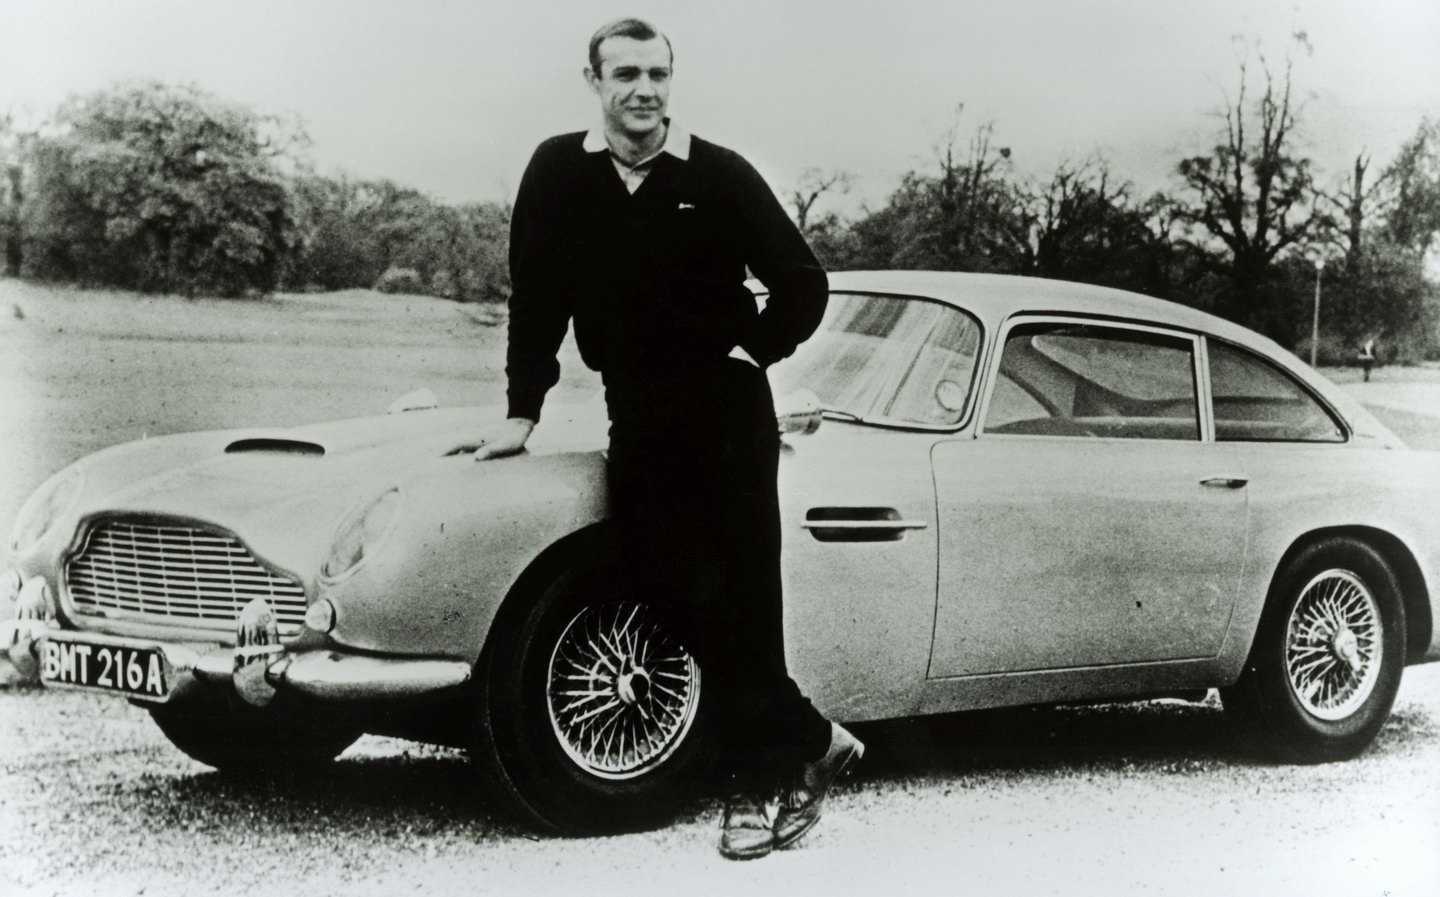 James Bond with the Aston Martin DB5